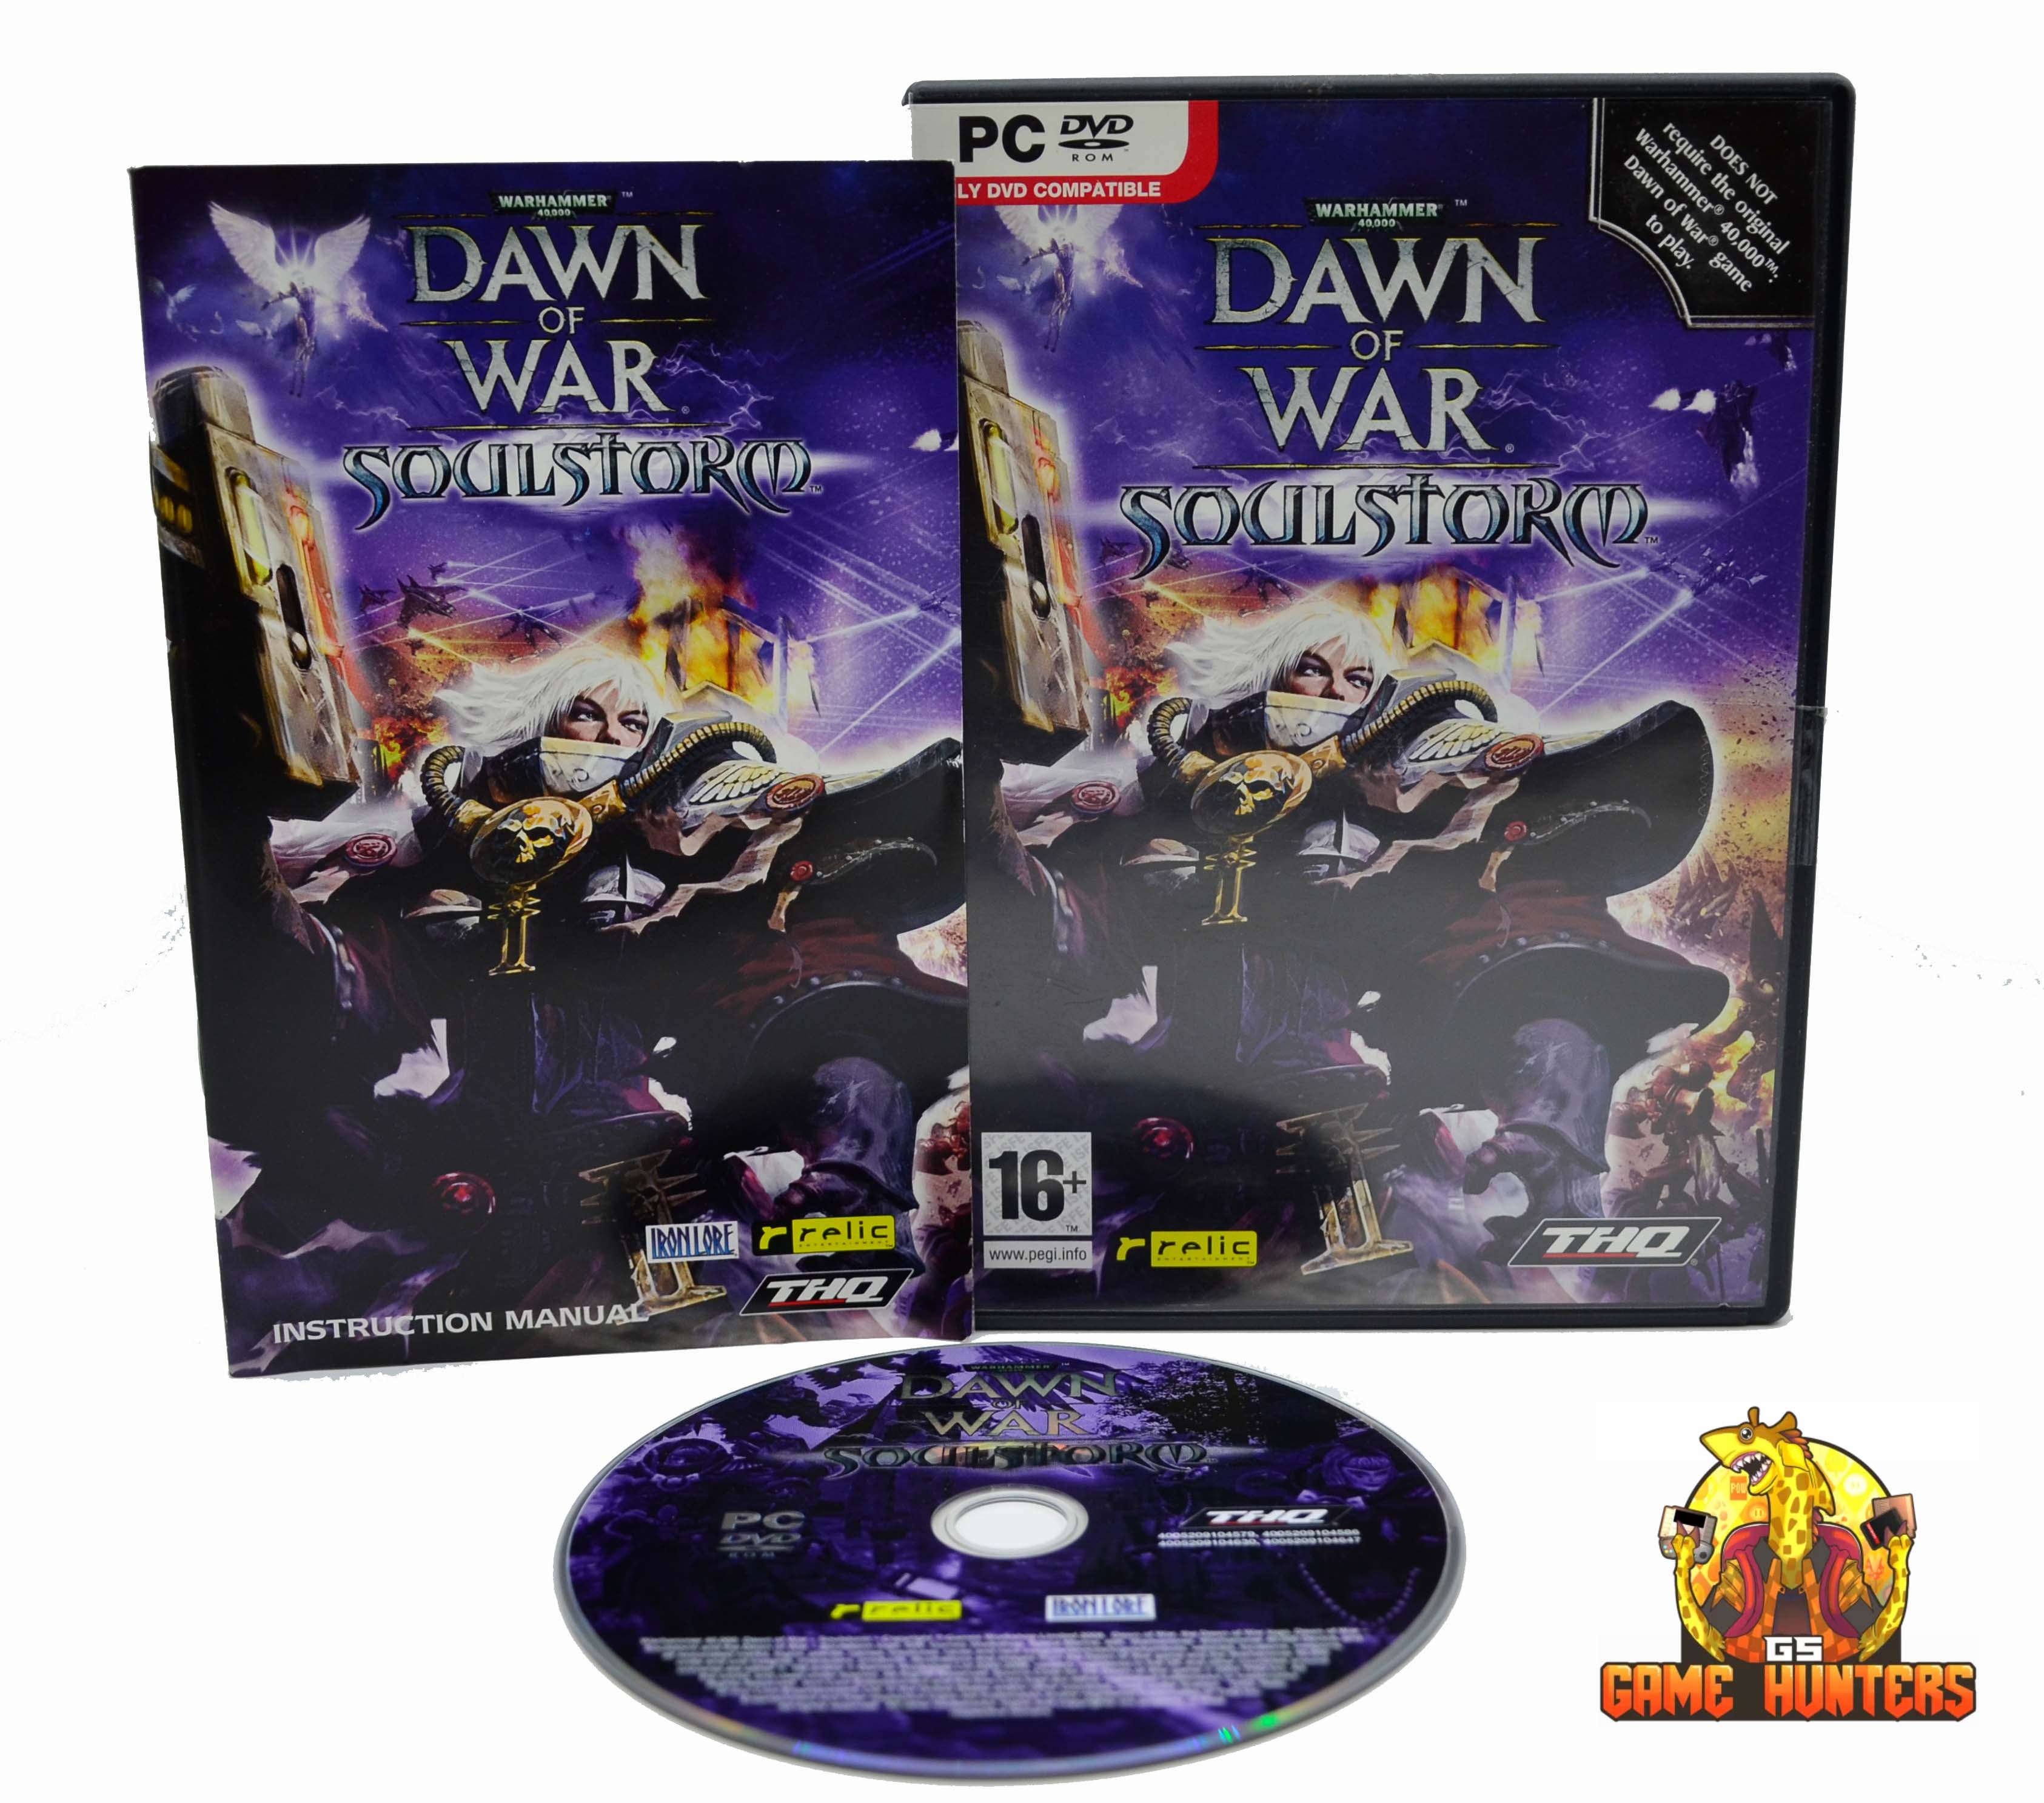 Dawn of War Soulstorm Case, Manual & Disc.jpg  by GSGAMEHUNTERS